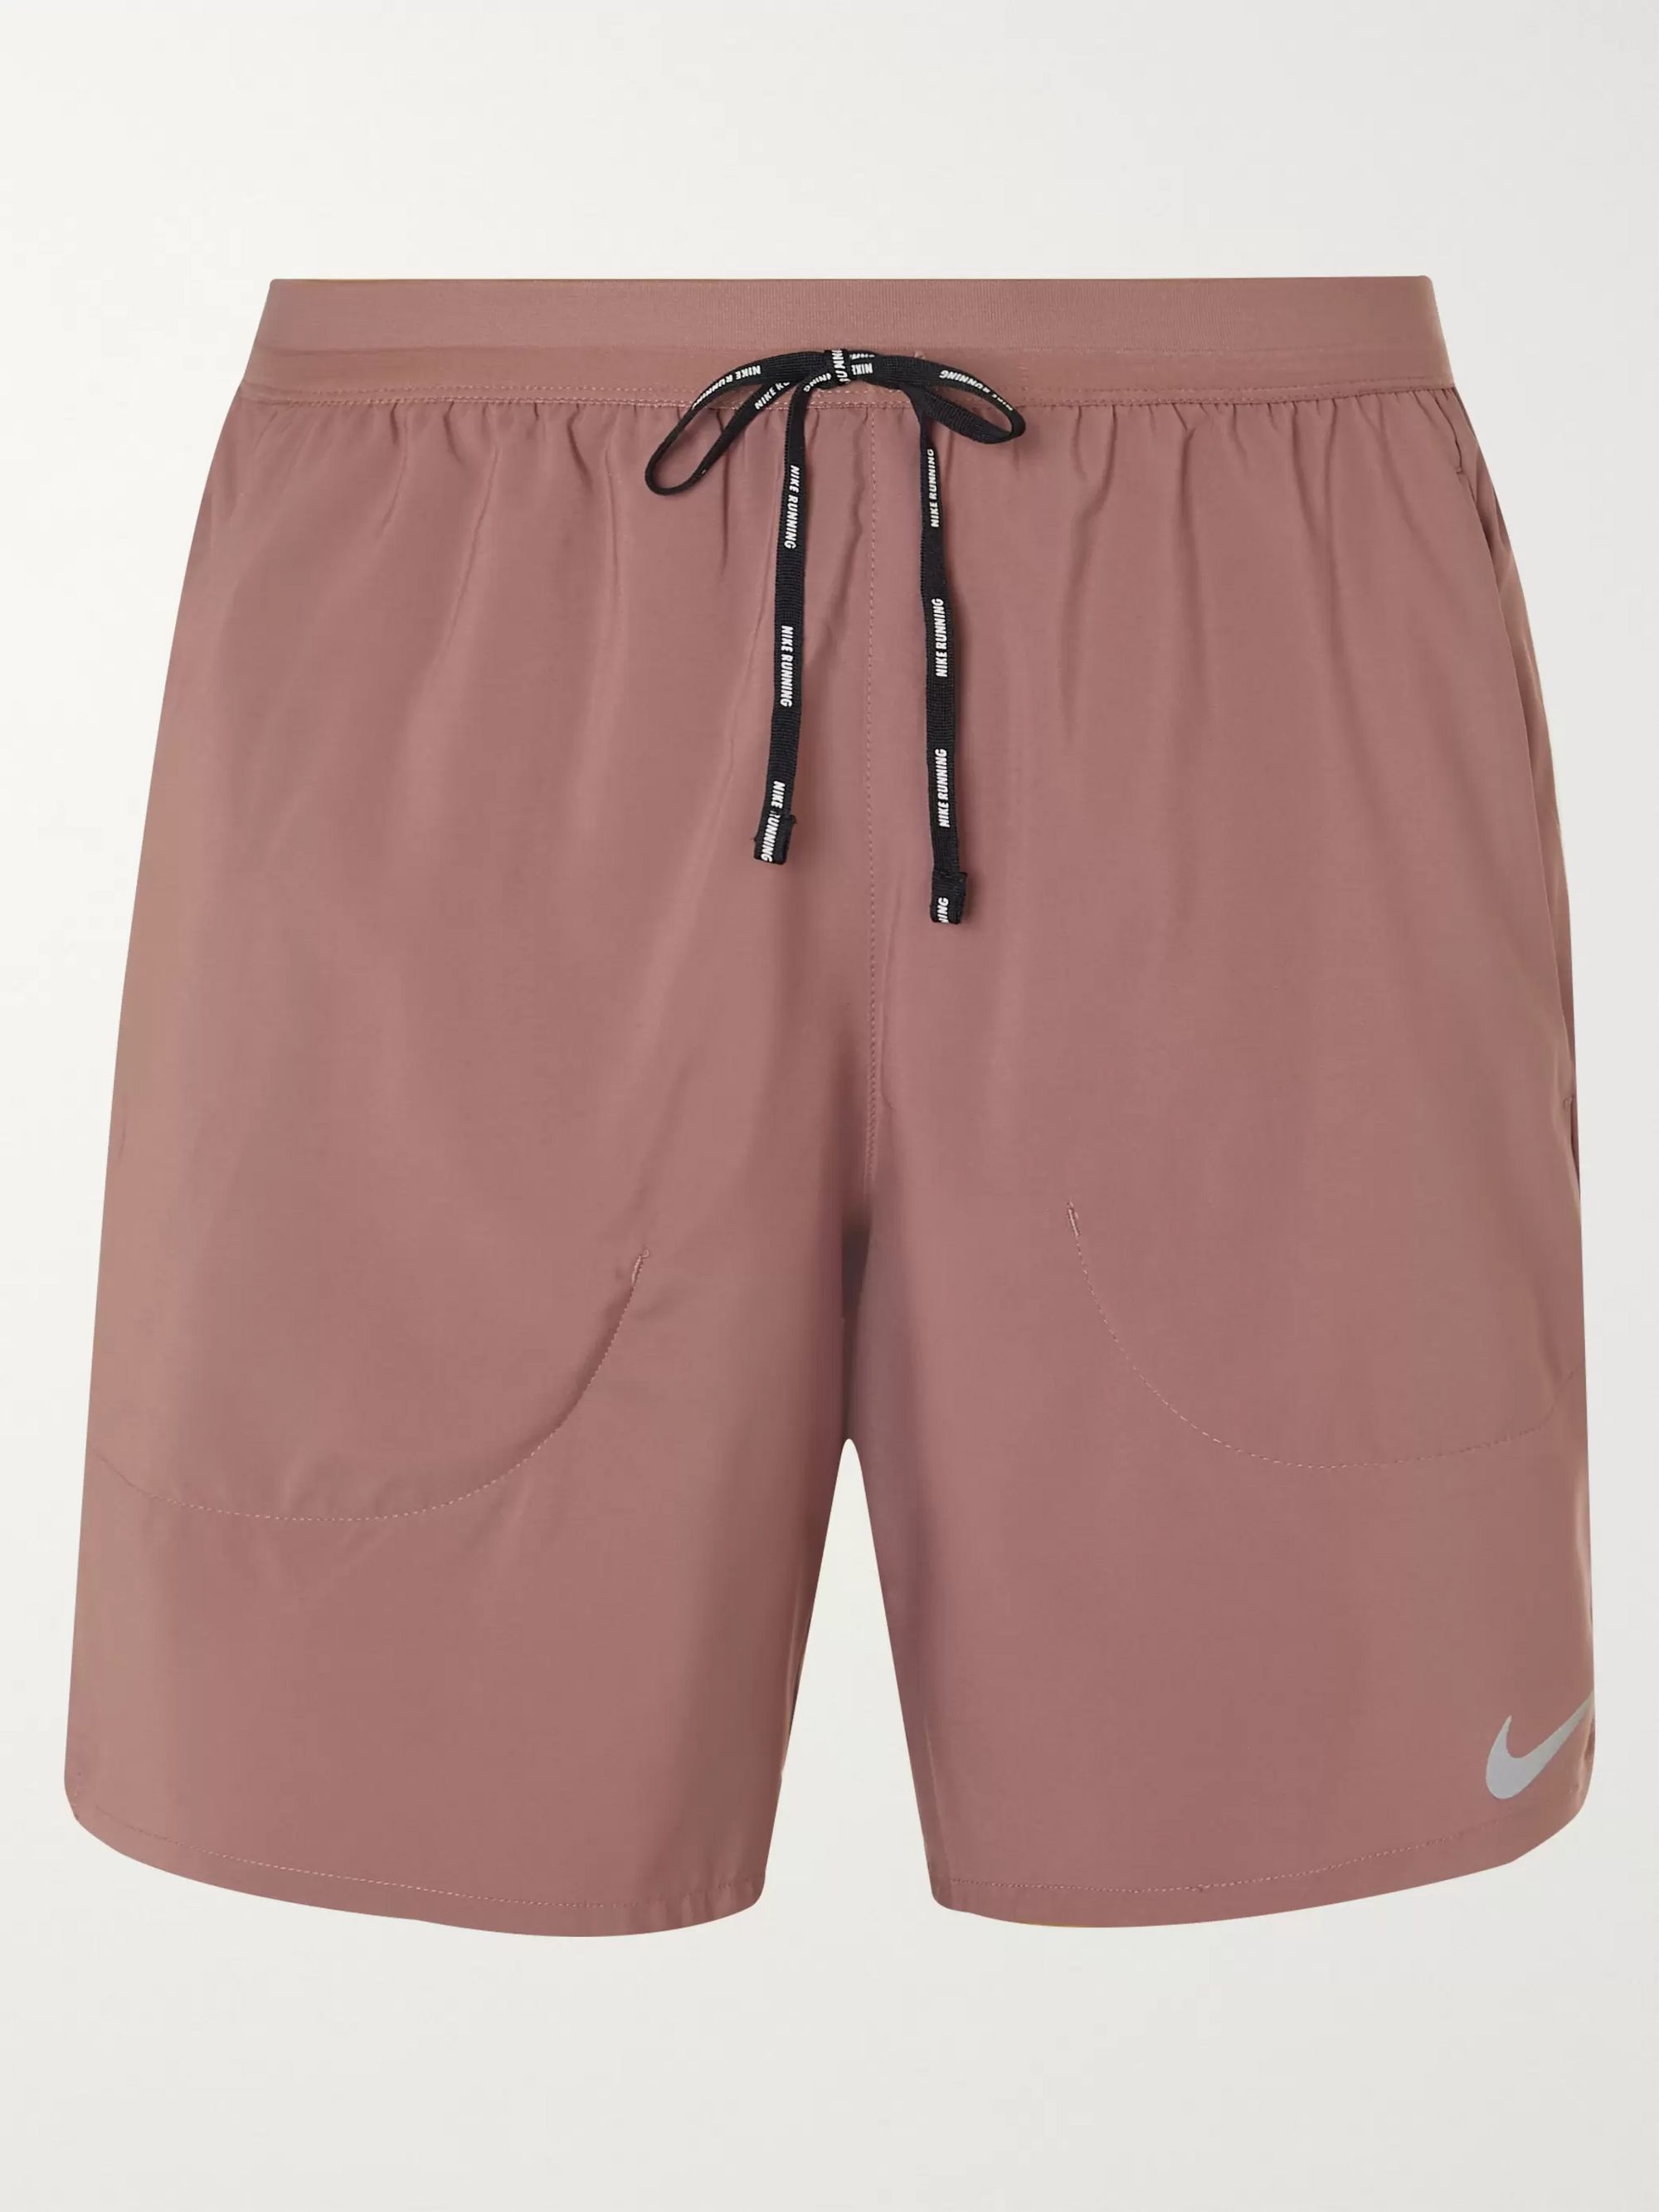 nike pink sweat shorts